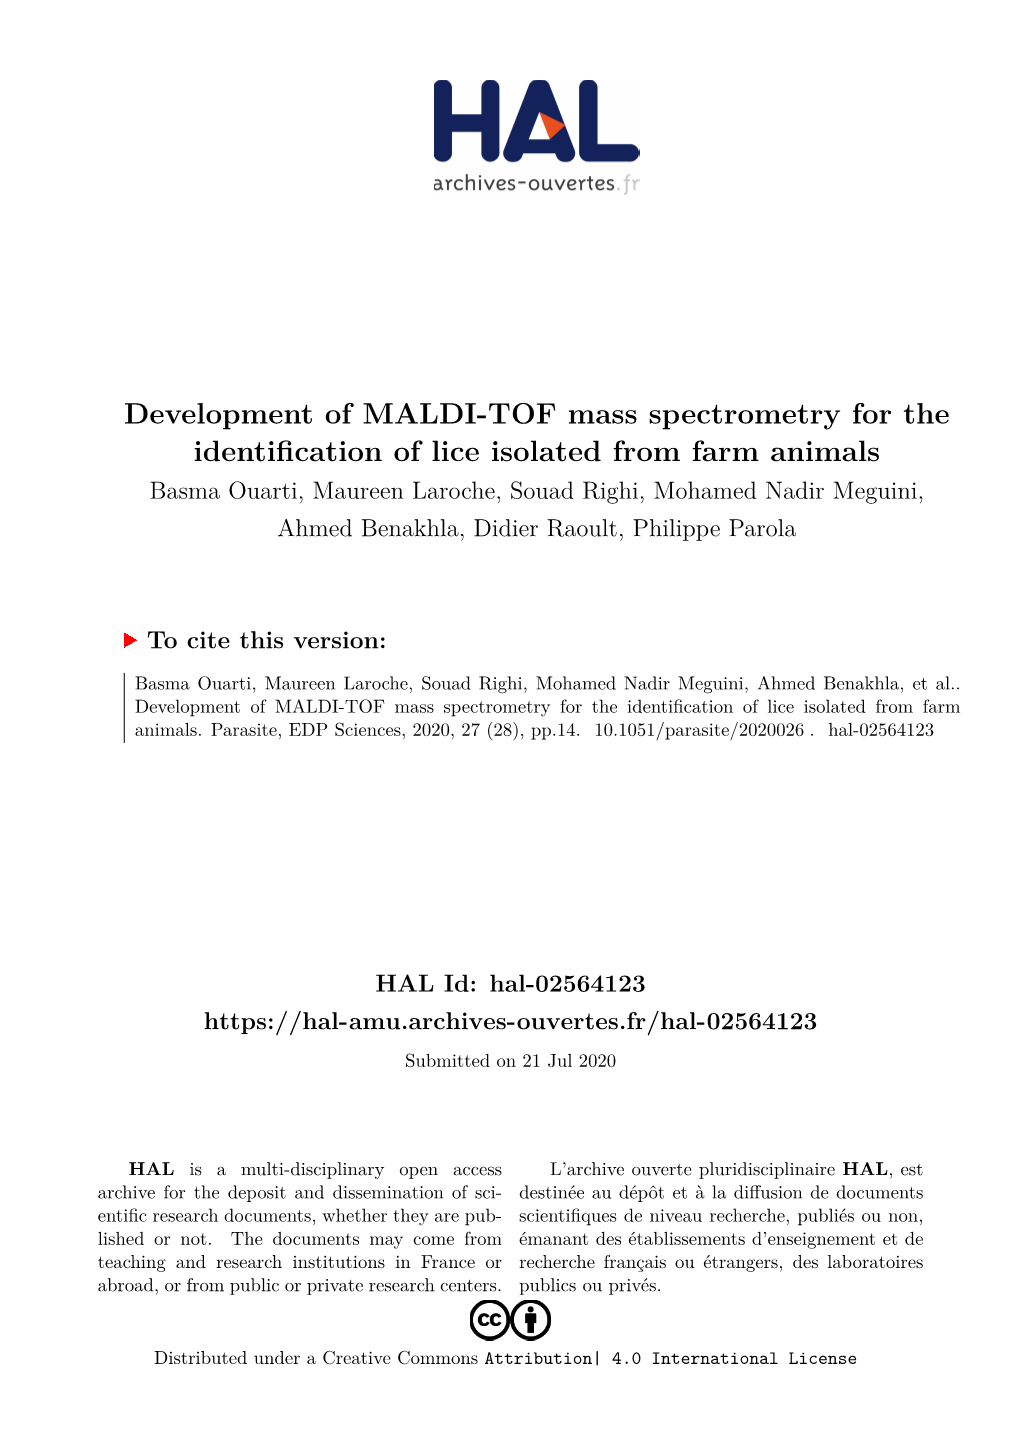 Development of MALDI-TOF Mass Spectrometry for The